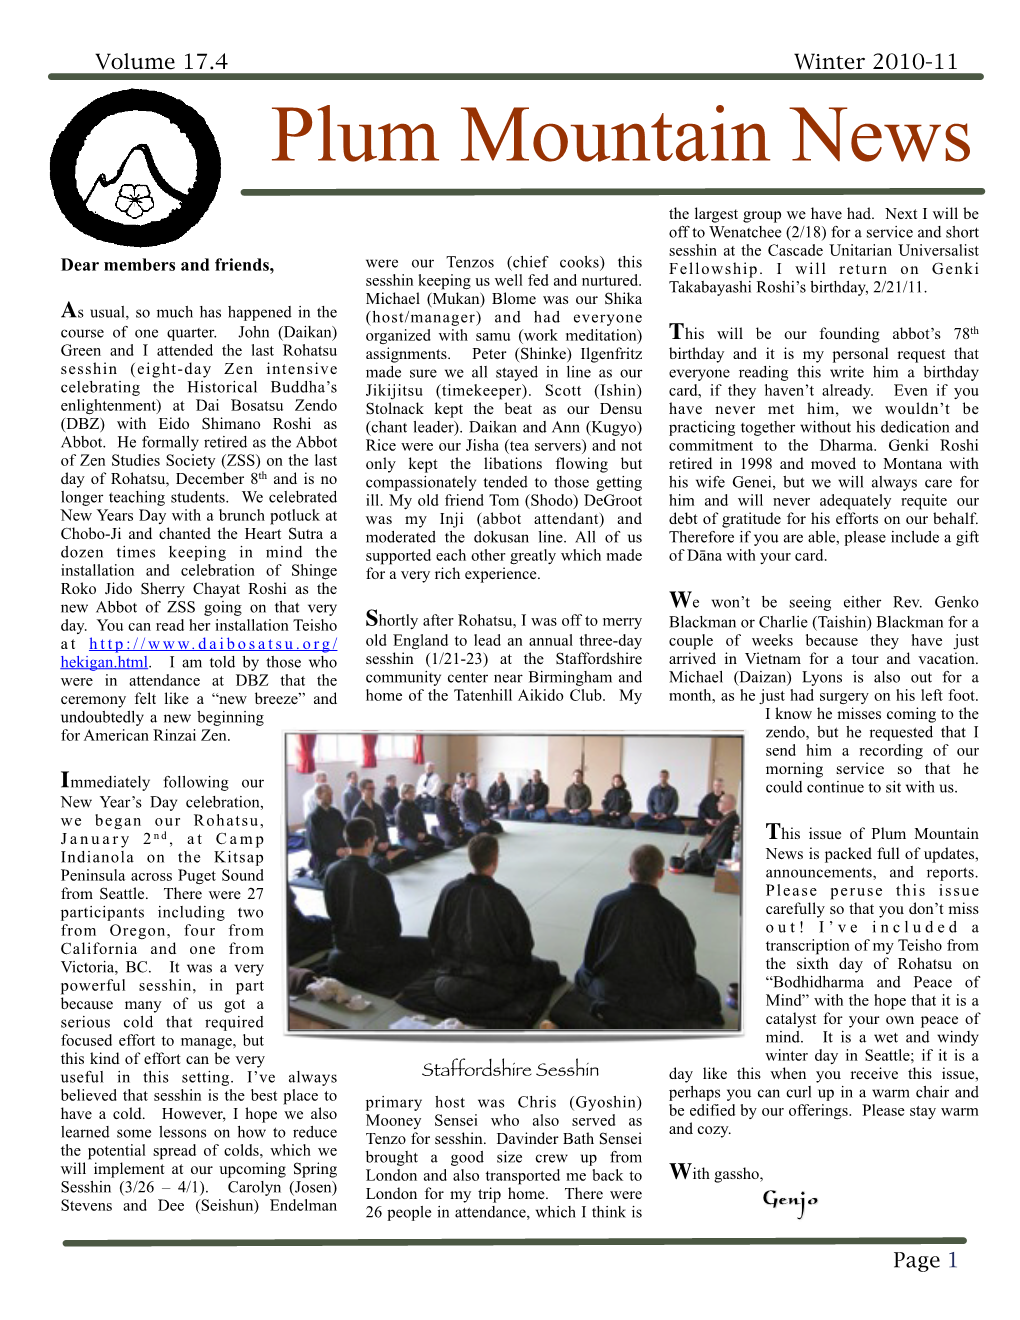 Plum Mountain News